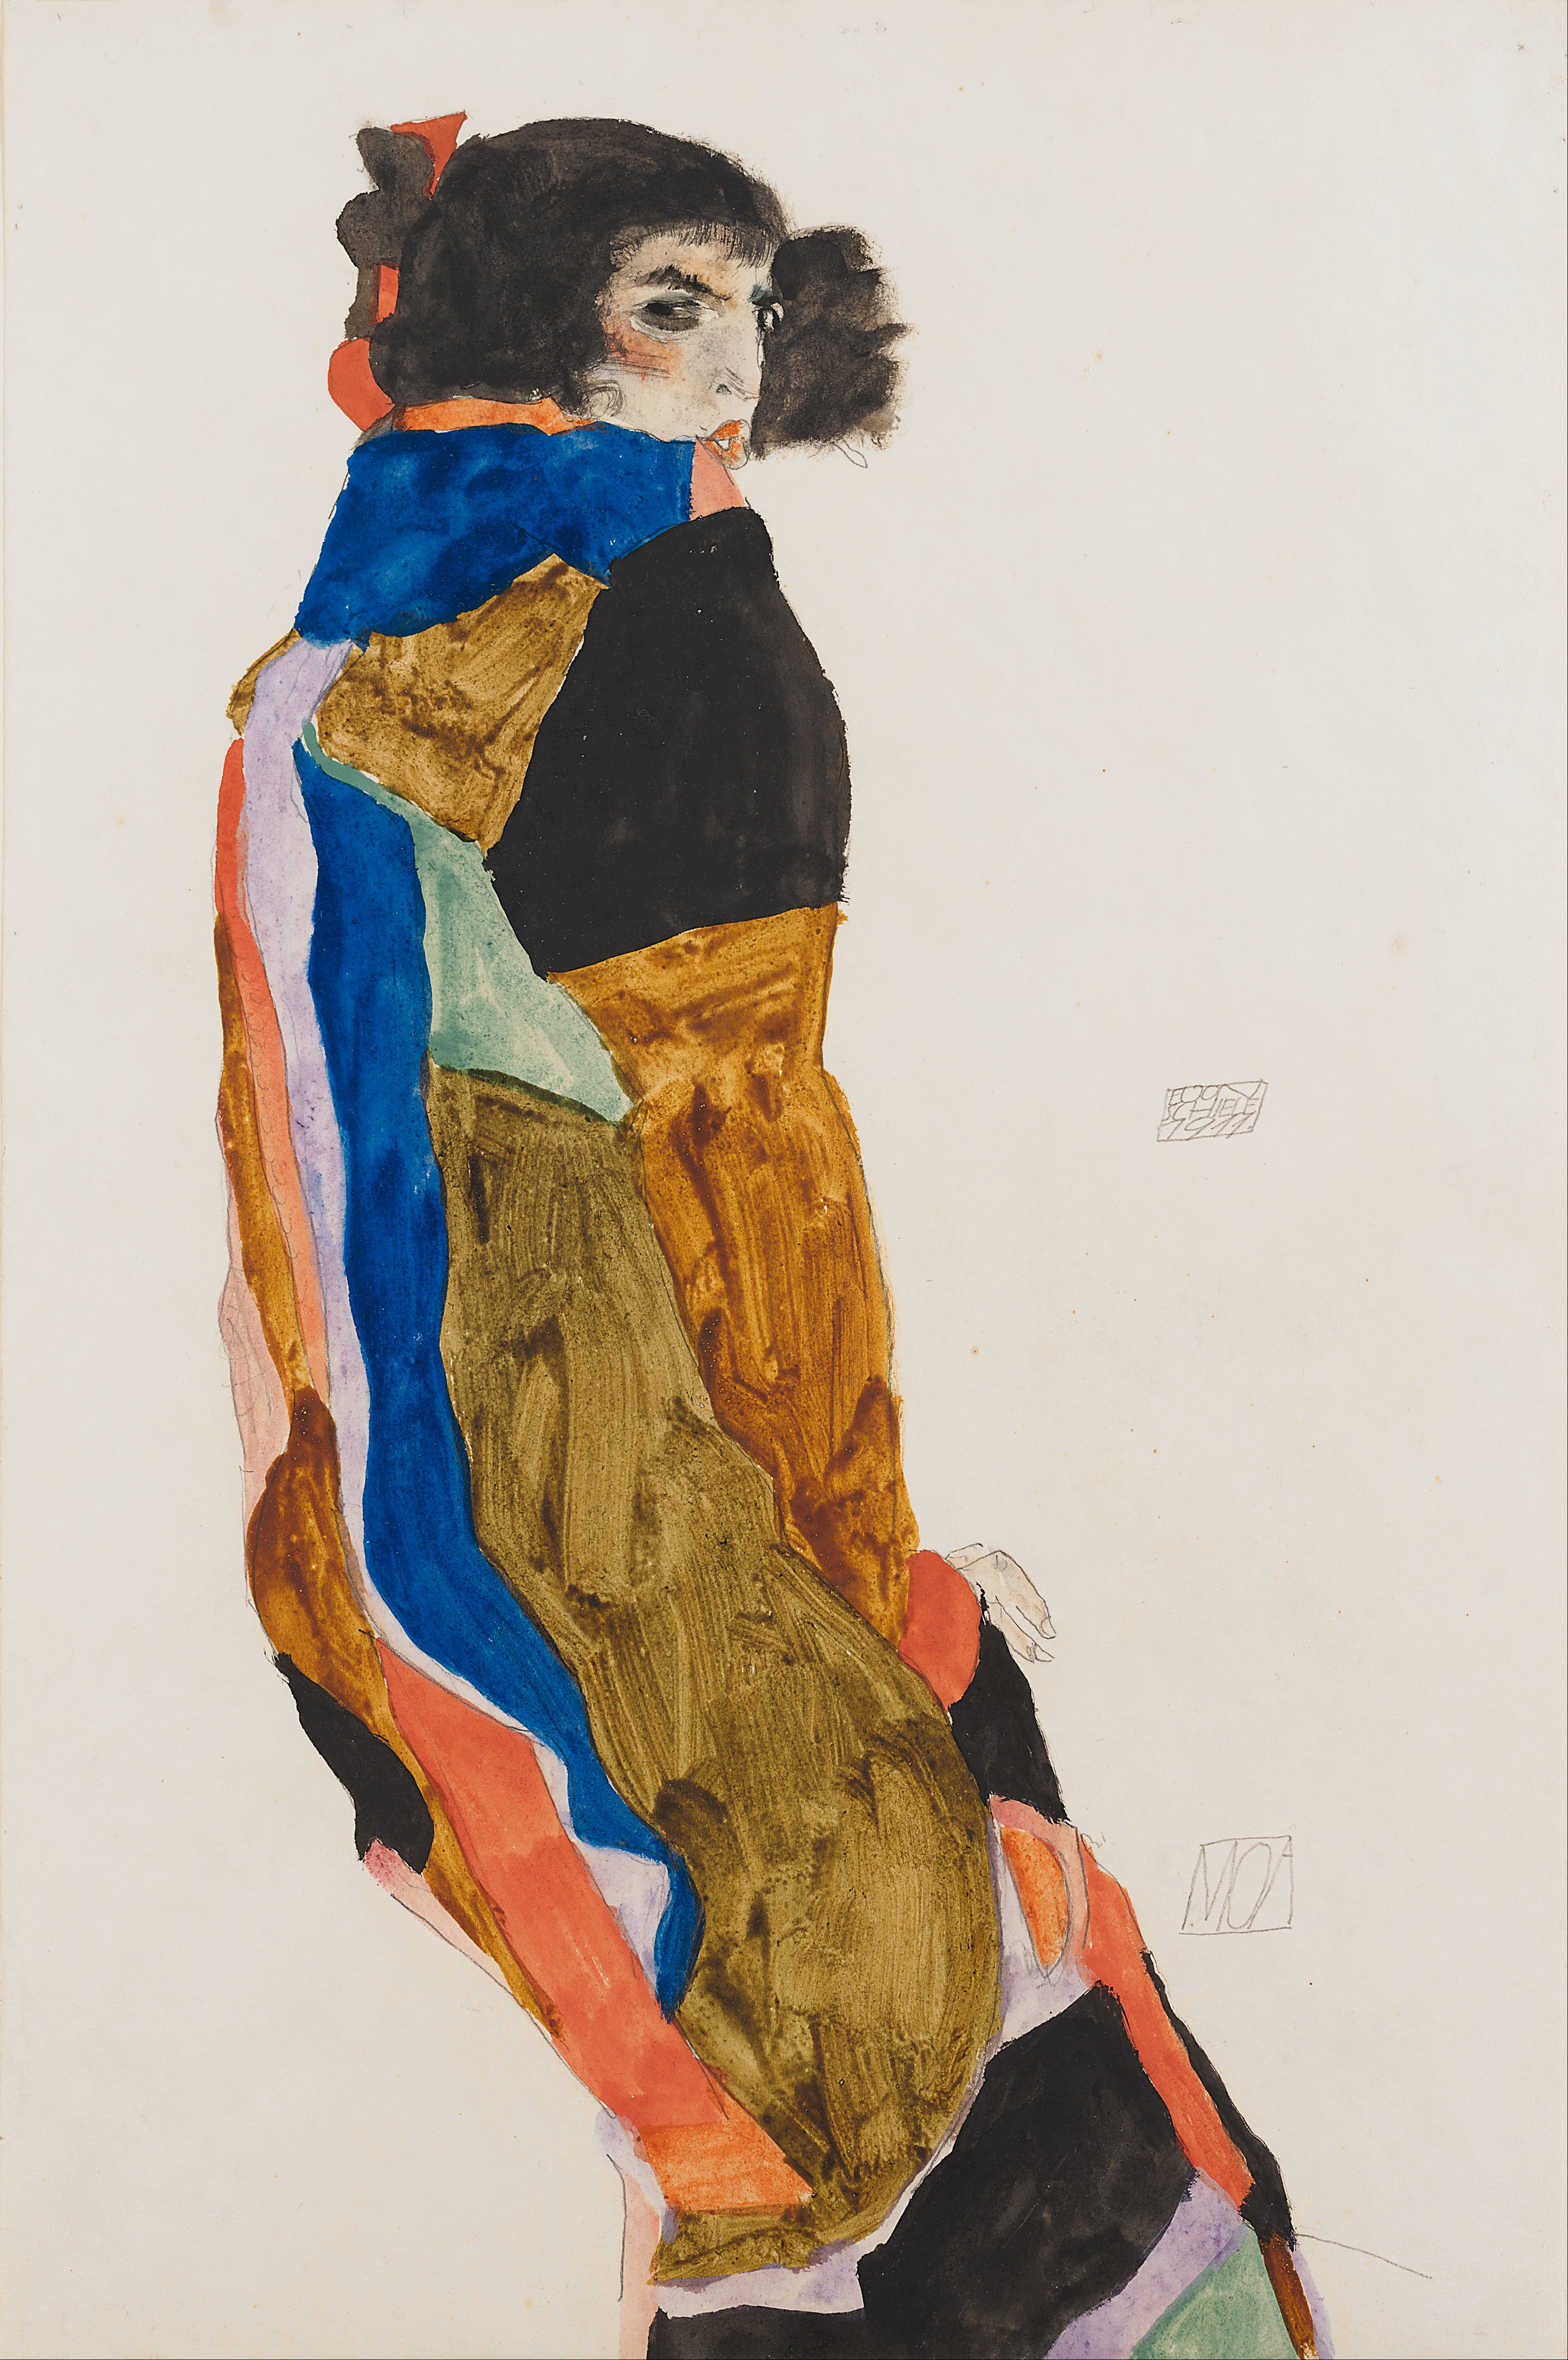 Moa by Egon Schiele - 1911 - 31,5 x 47,8 cm 